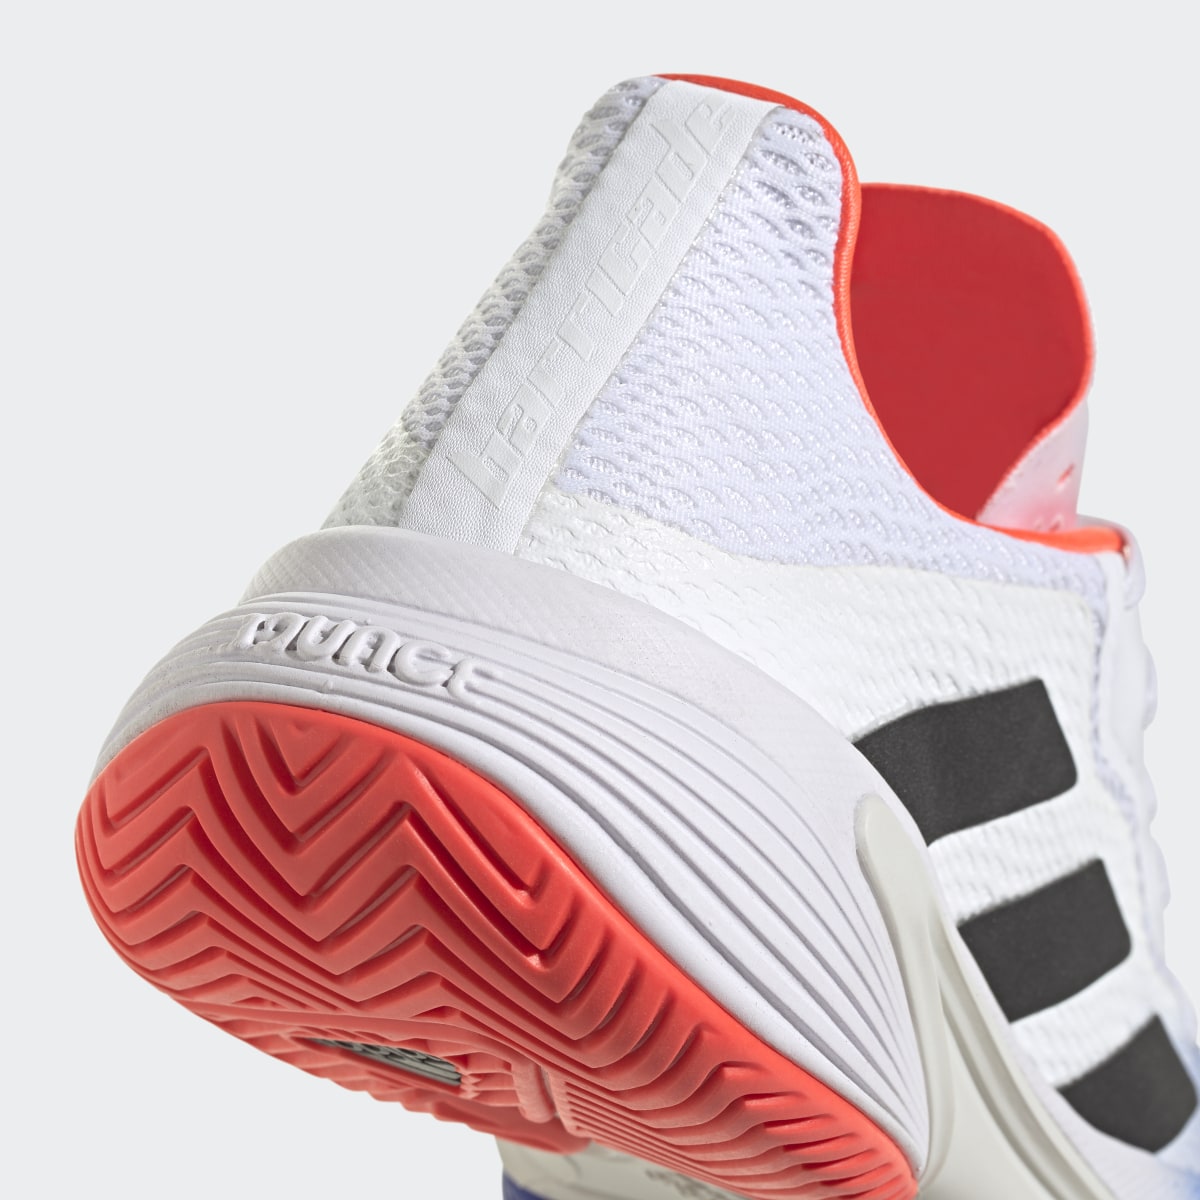 Adidas Barricade Tennis Shoes. 15